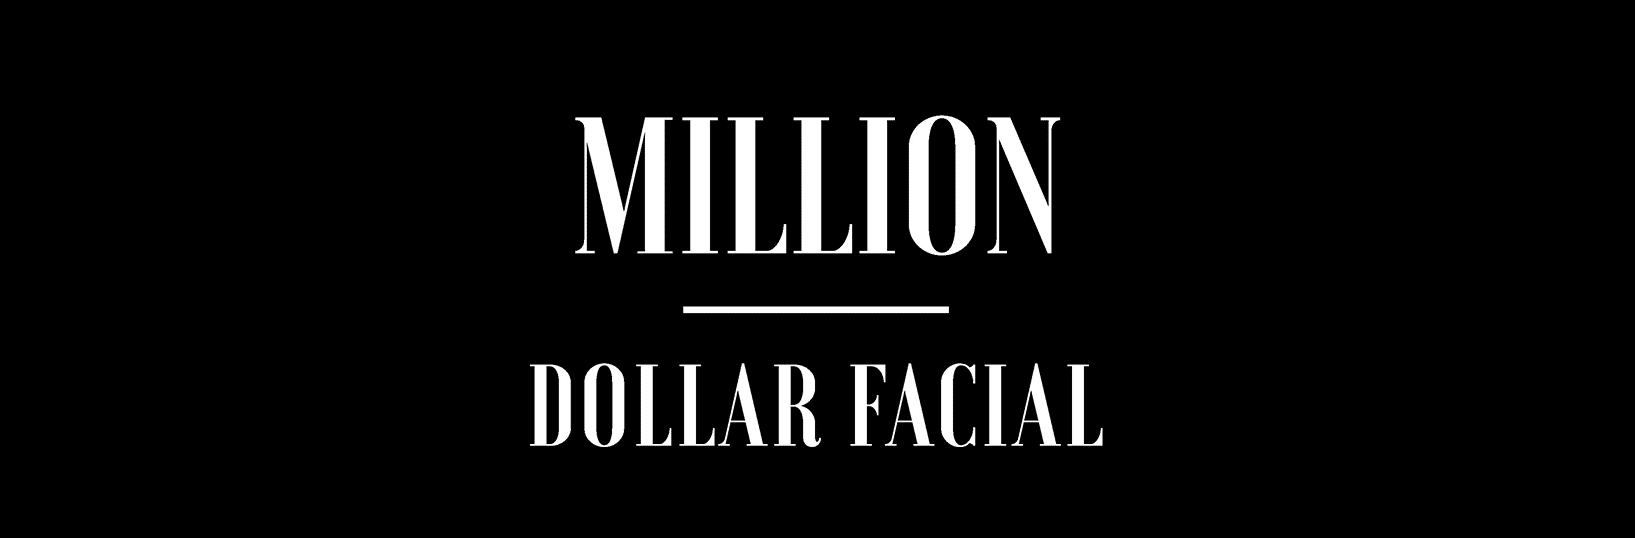 Million Dollar facial logo